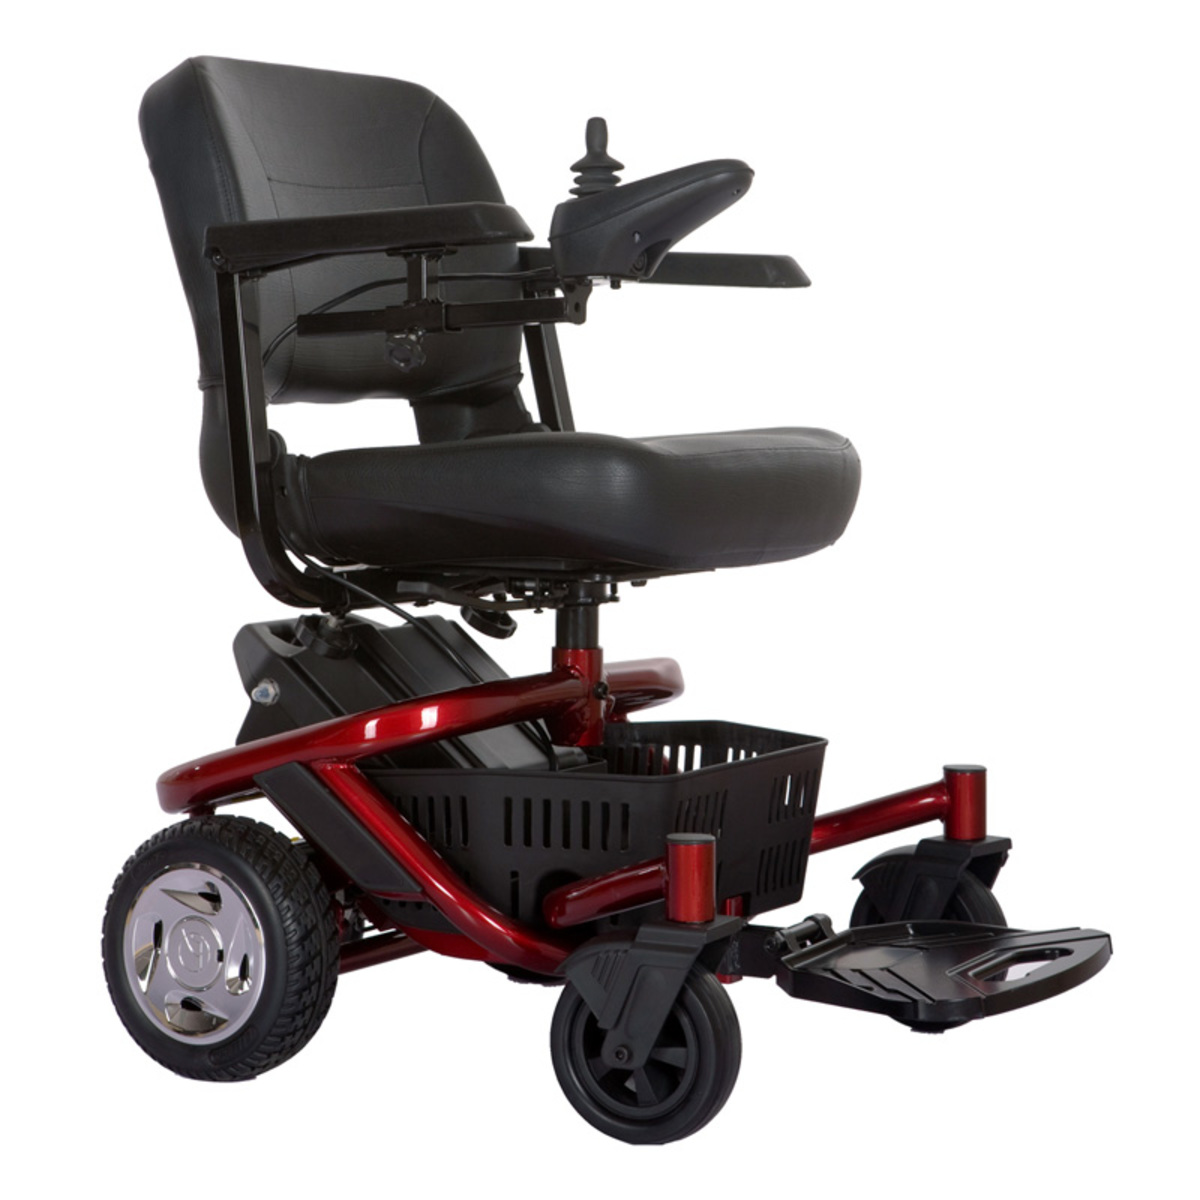 2Go Ability Quest Power Chair - Disability Item